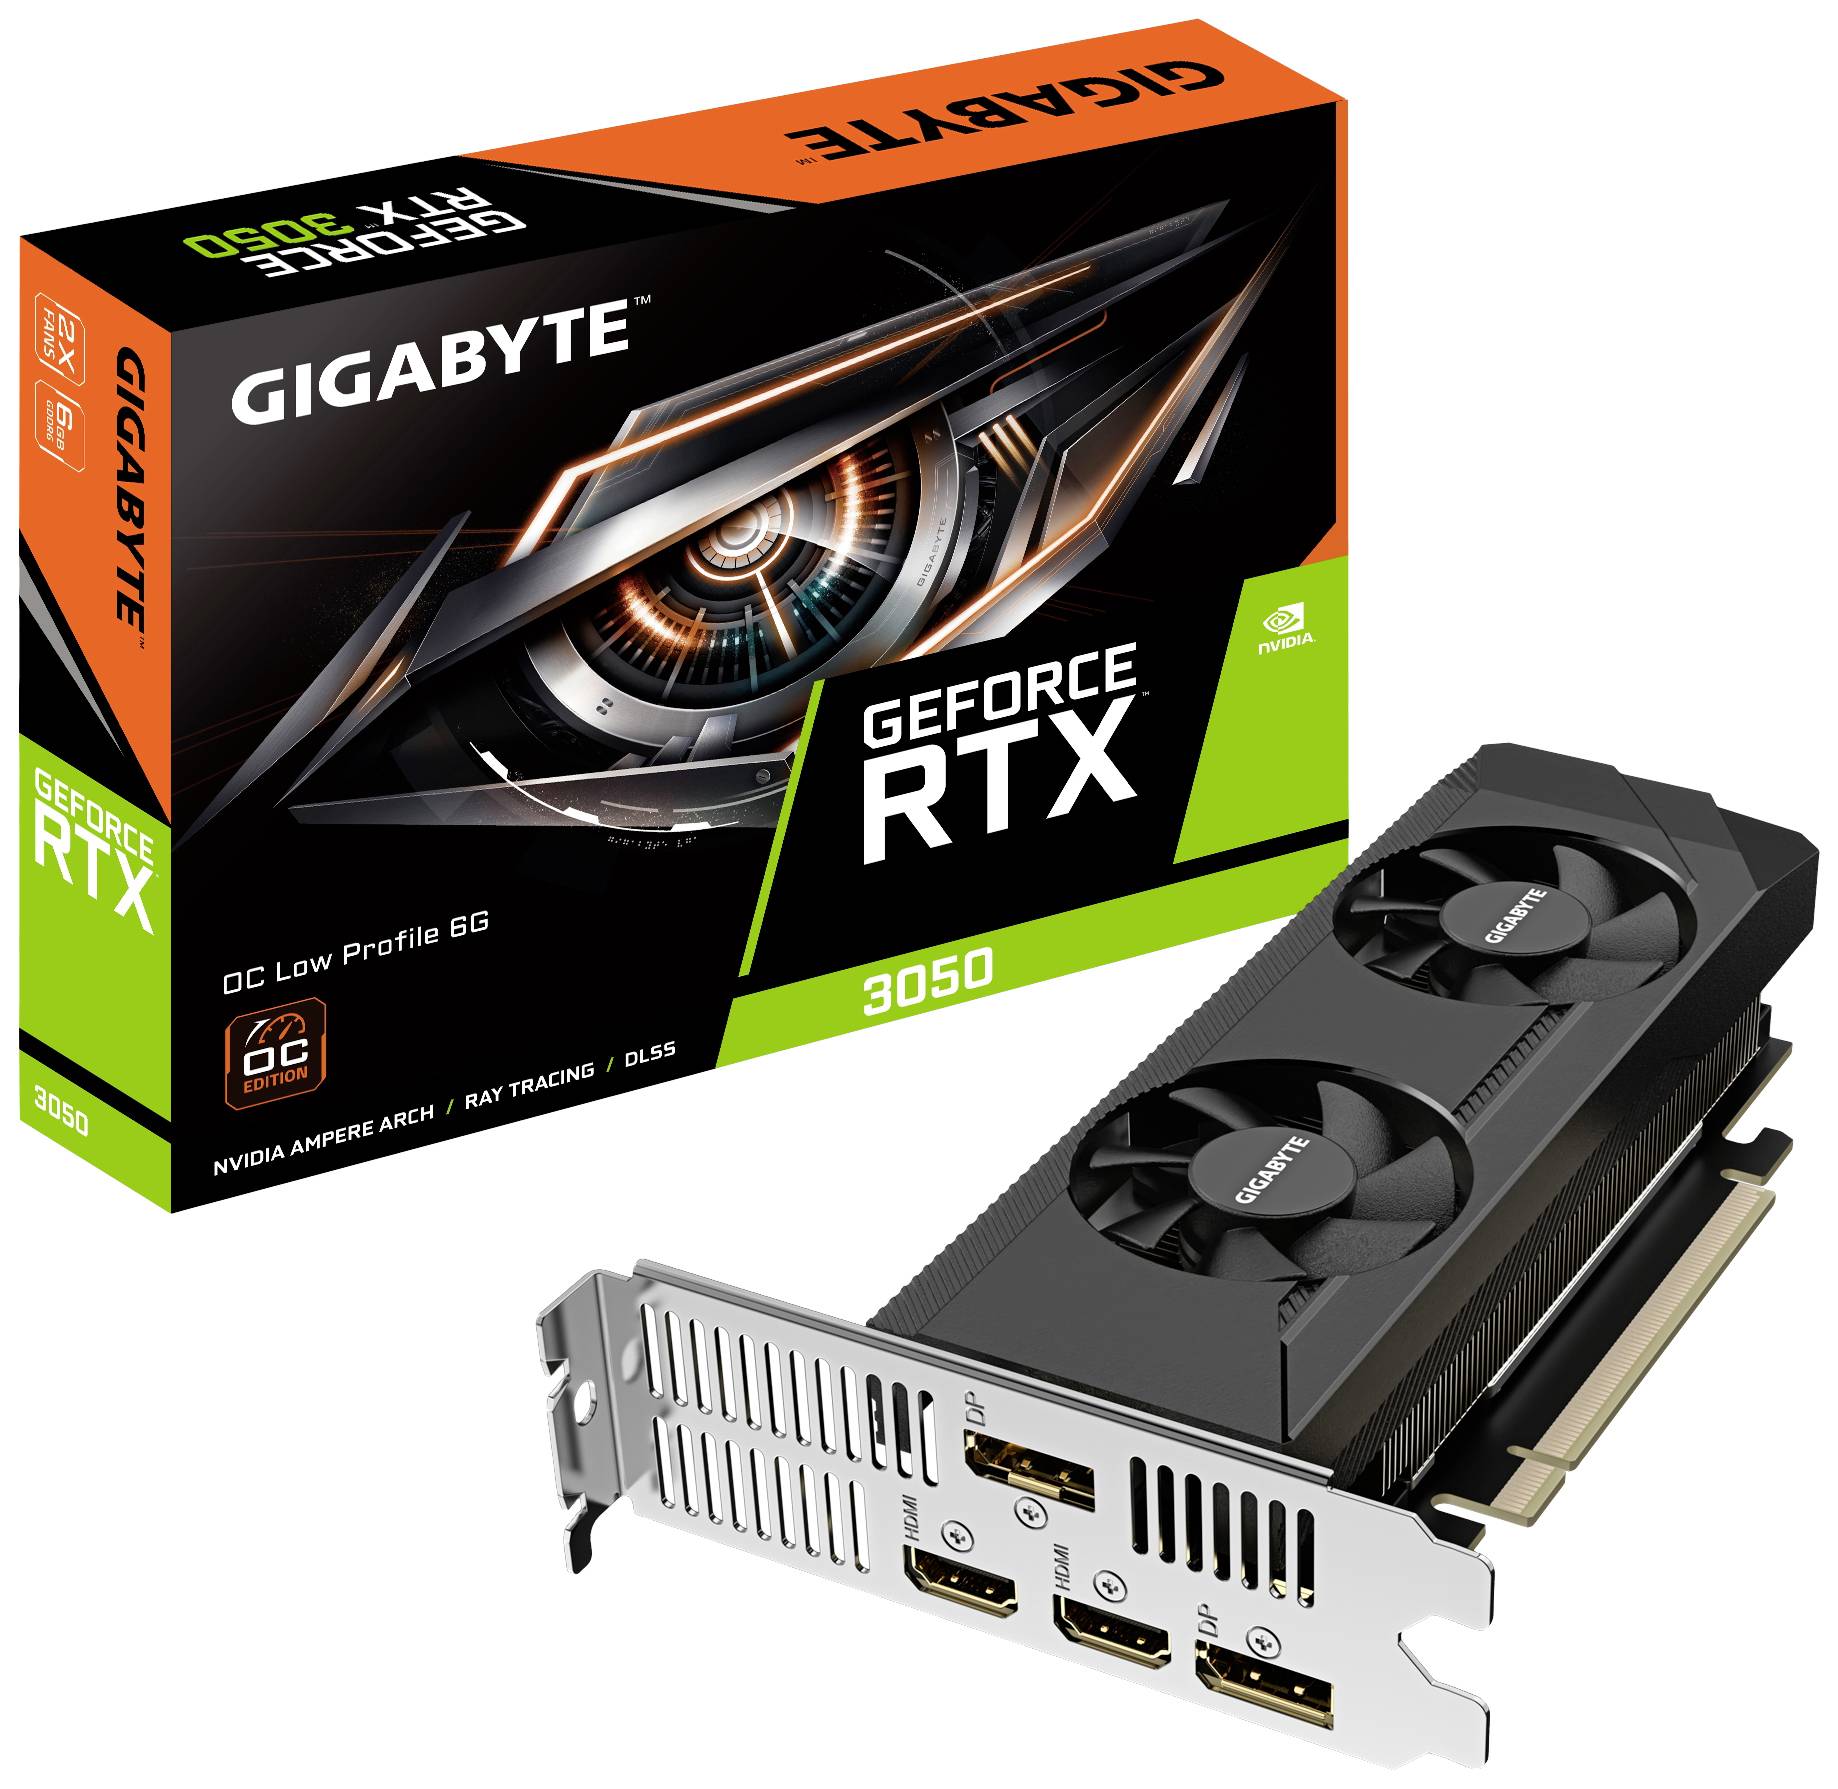 GIGABYTE GeForce RTX 3050 6GB